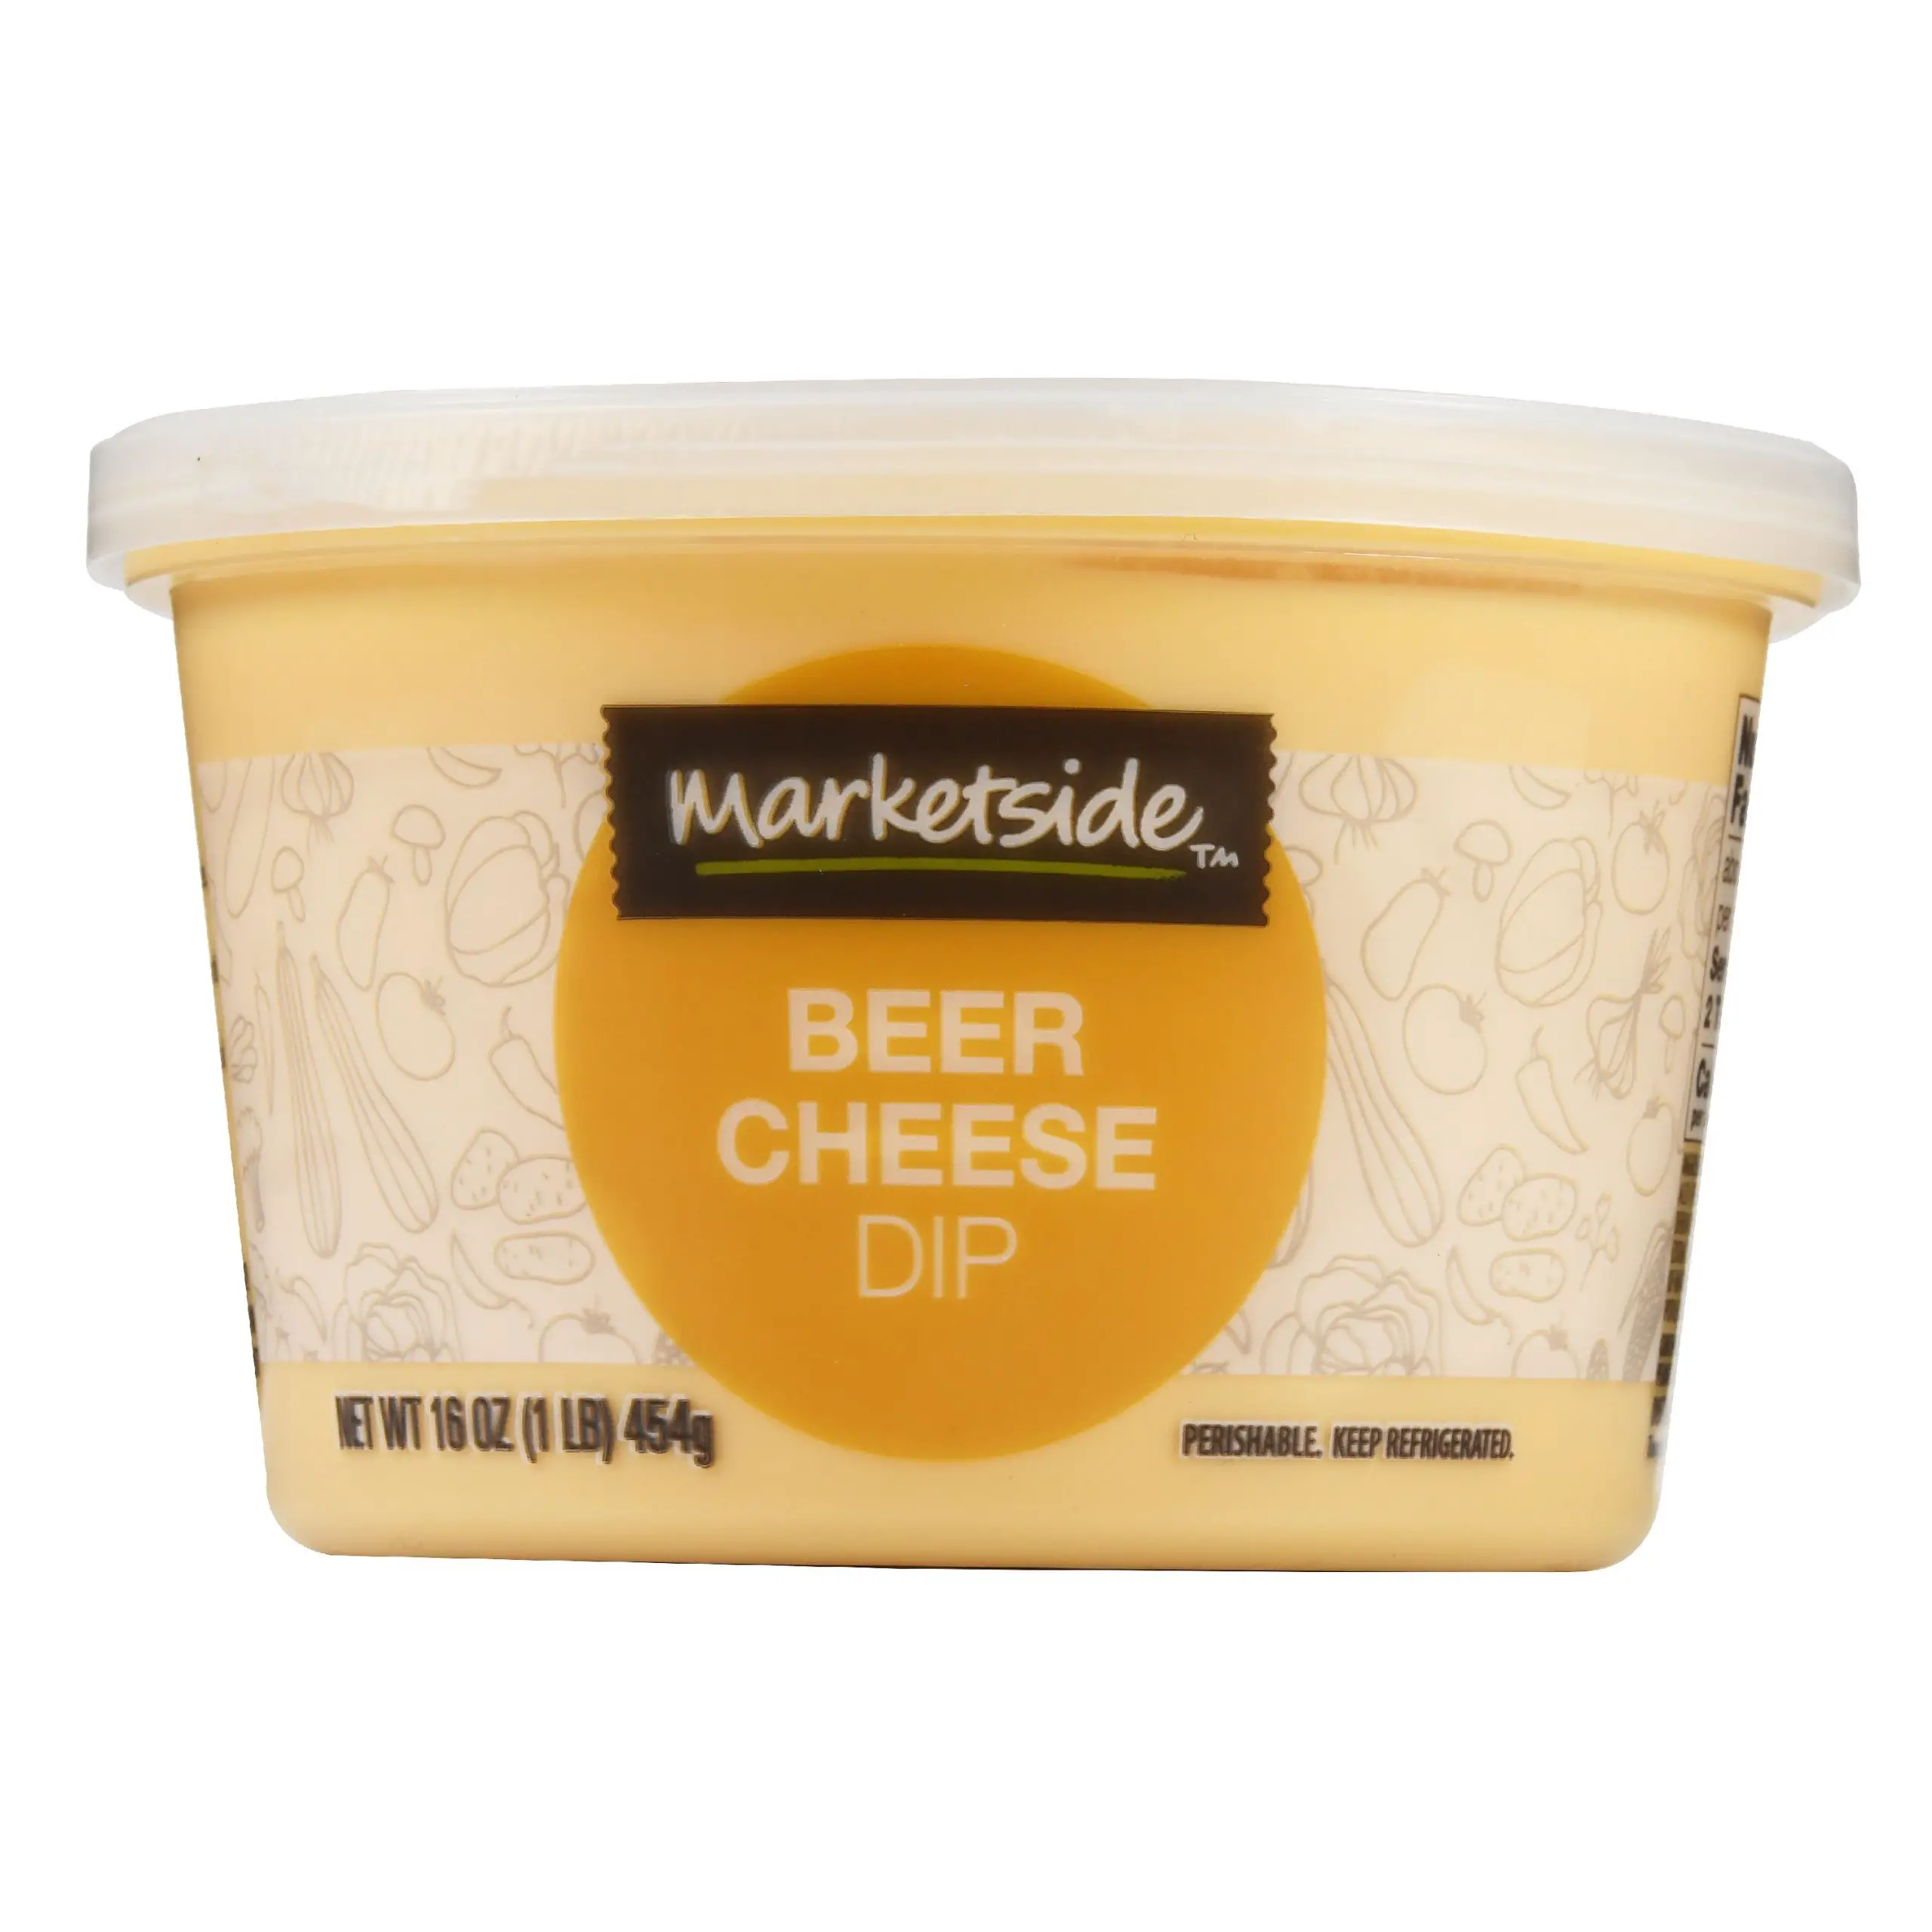 Marketside Beer Cheese Dip, 16 oz